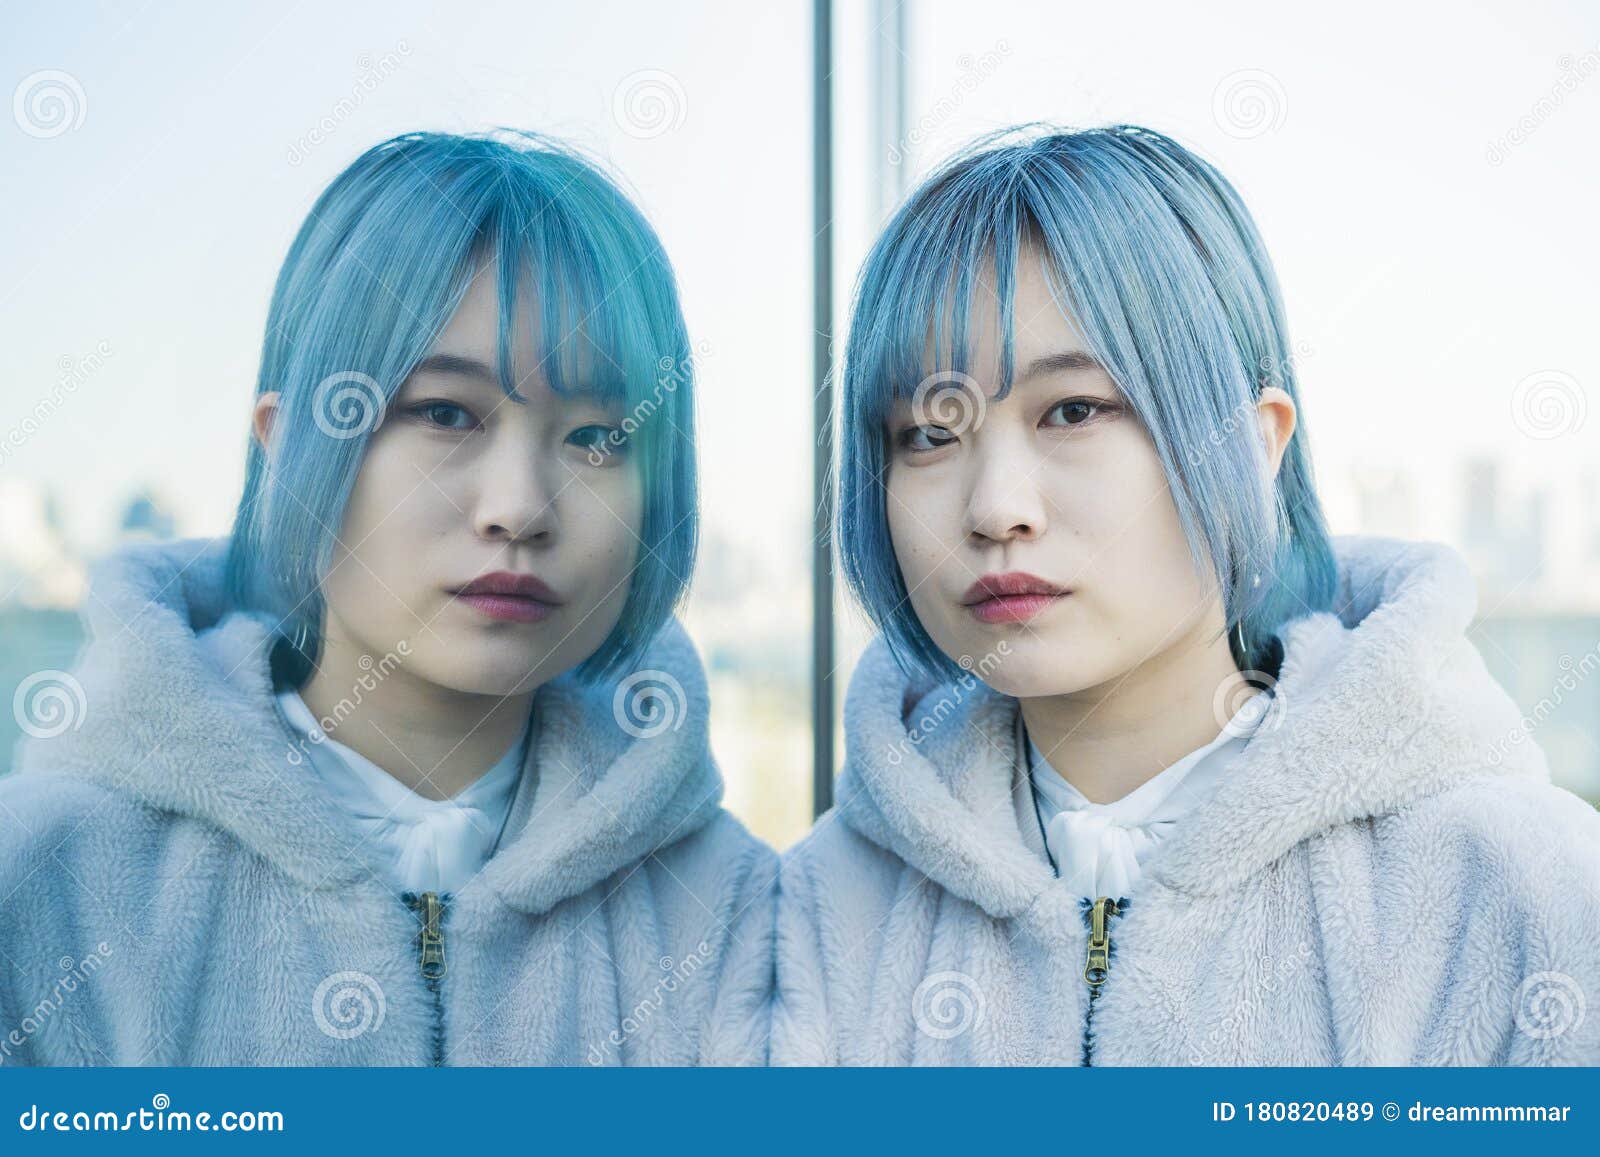 3. "Cute Asian Girl with Blue Hair" by @cuteasian - wide 8